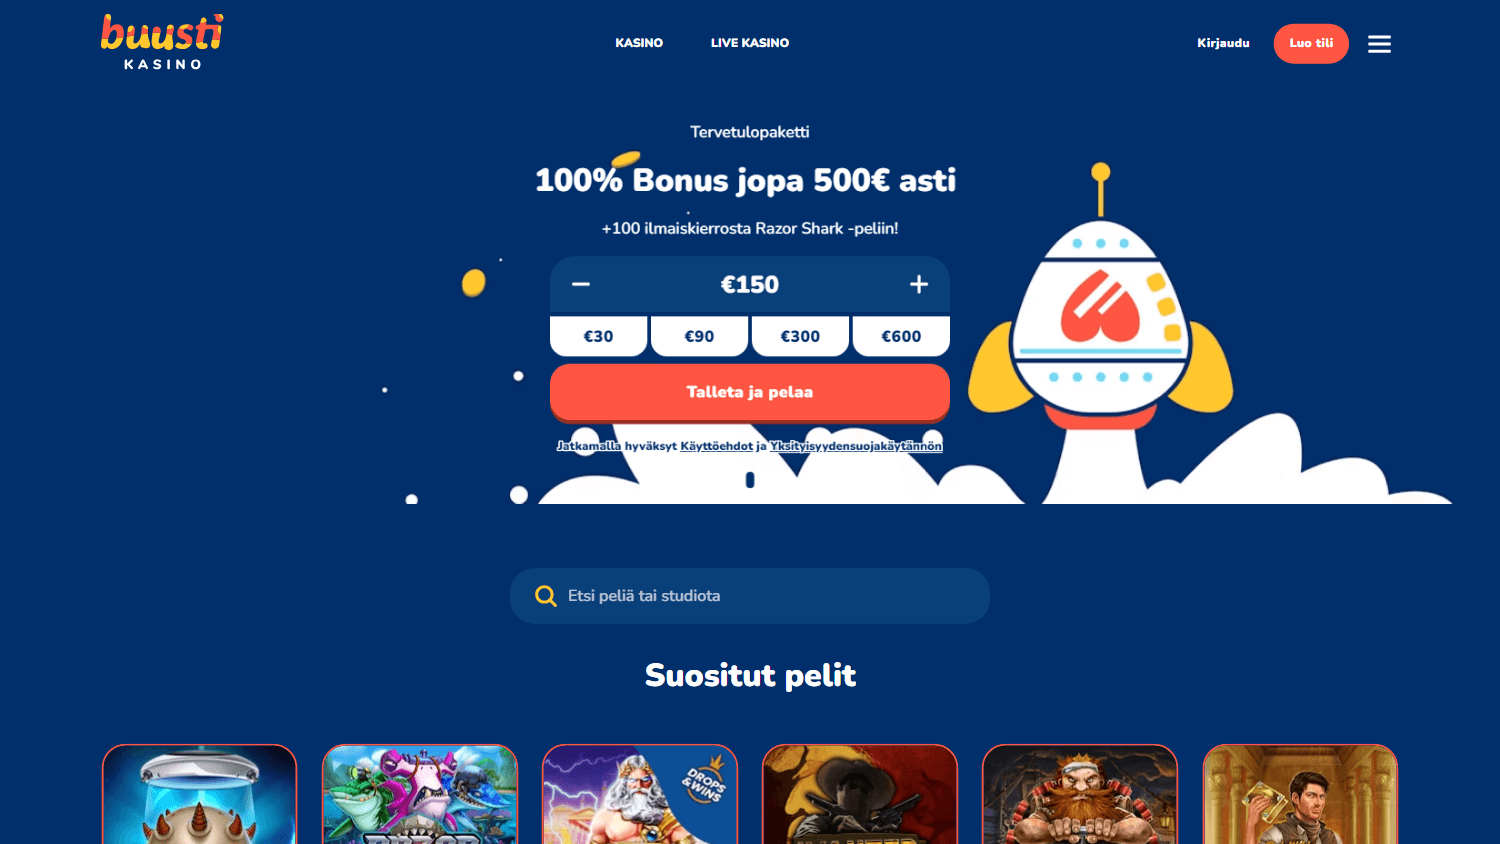 buusti_casino_homepage_desktop